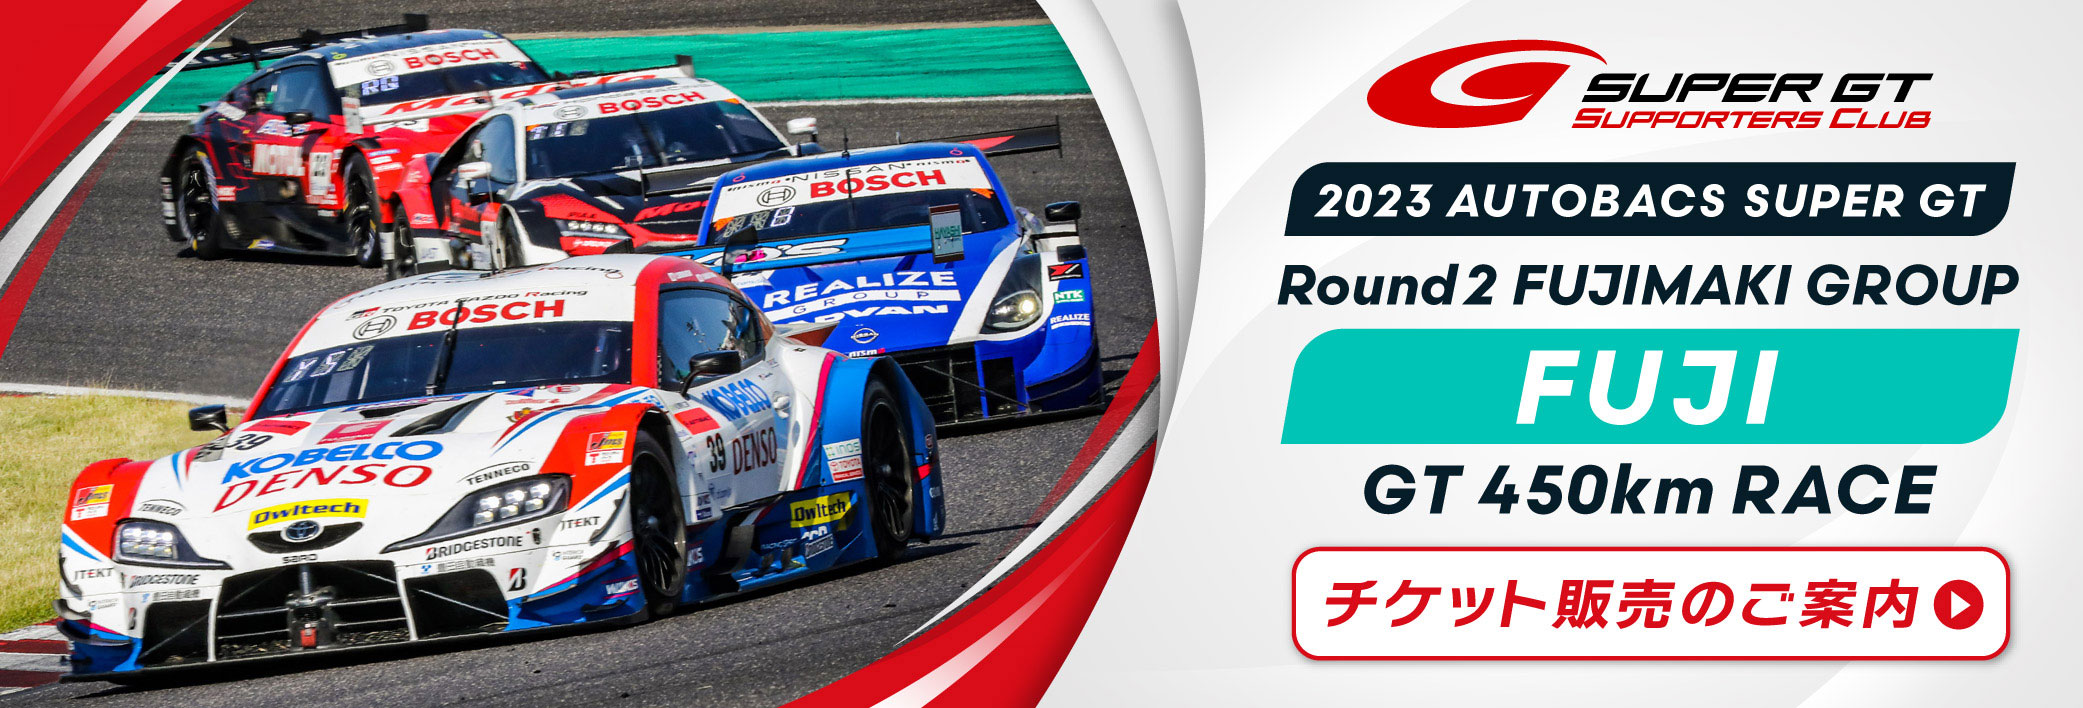 2023 AUTOBACS SUPER GT Round2　FUJI GT 450km RACEチケット販売のご案内